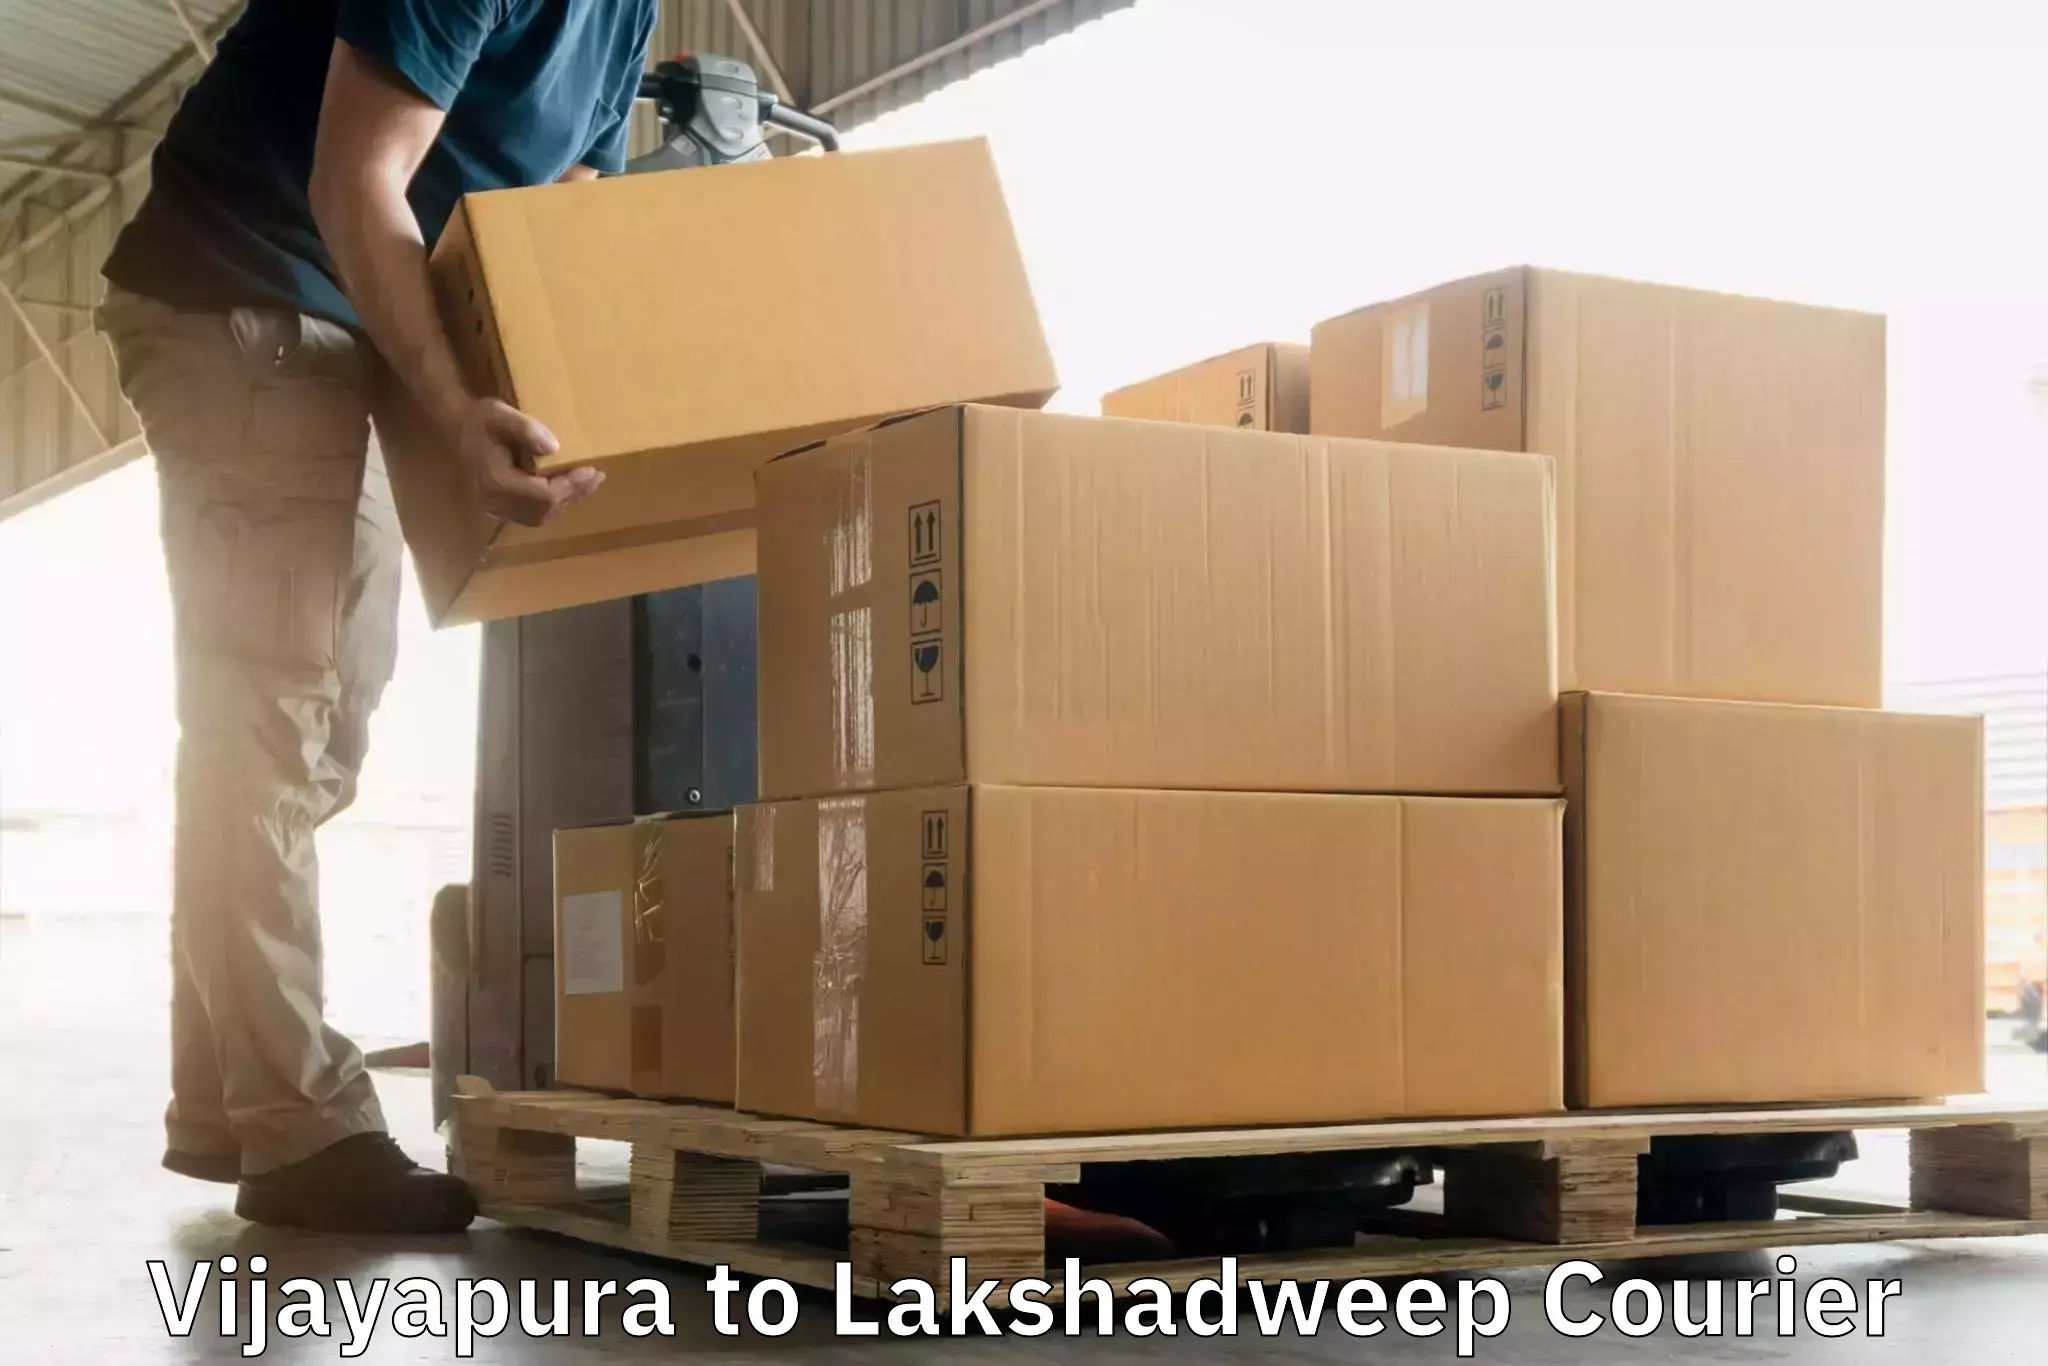 State-of-the-art courier technology Vijayapura to Lakshadweep